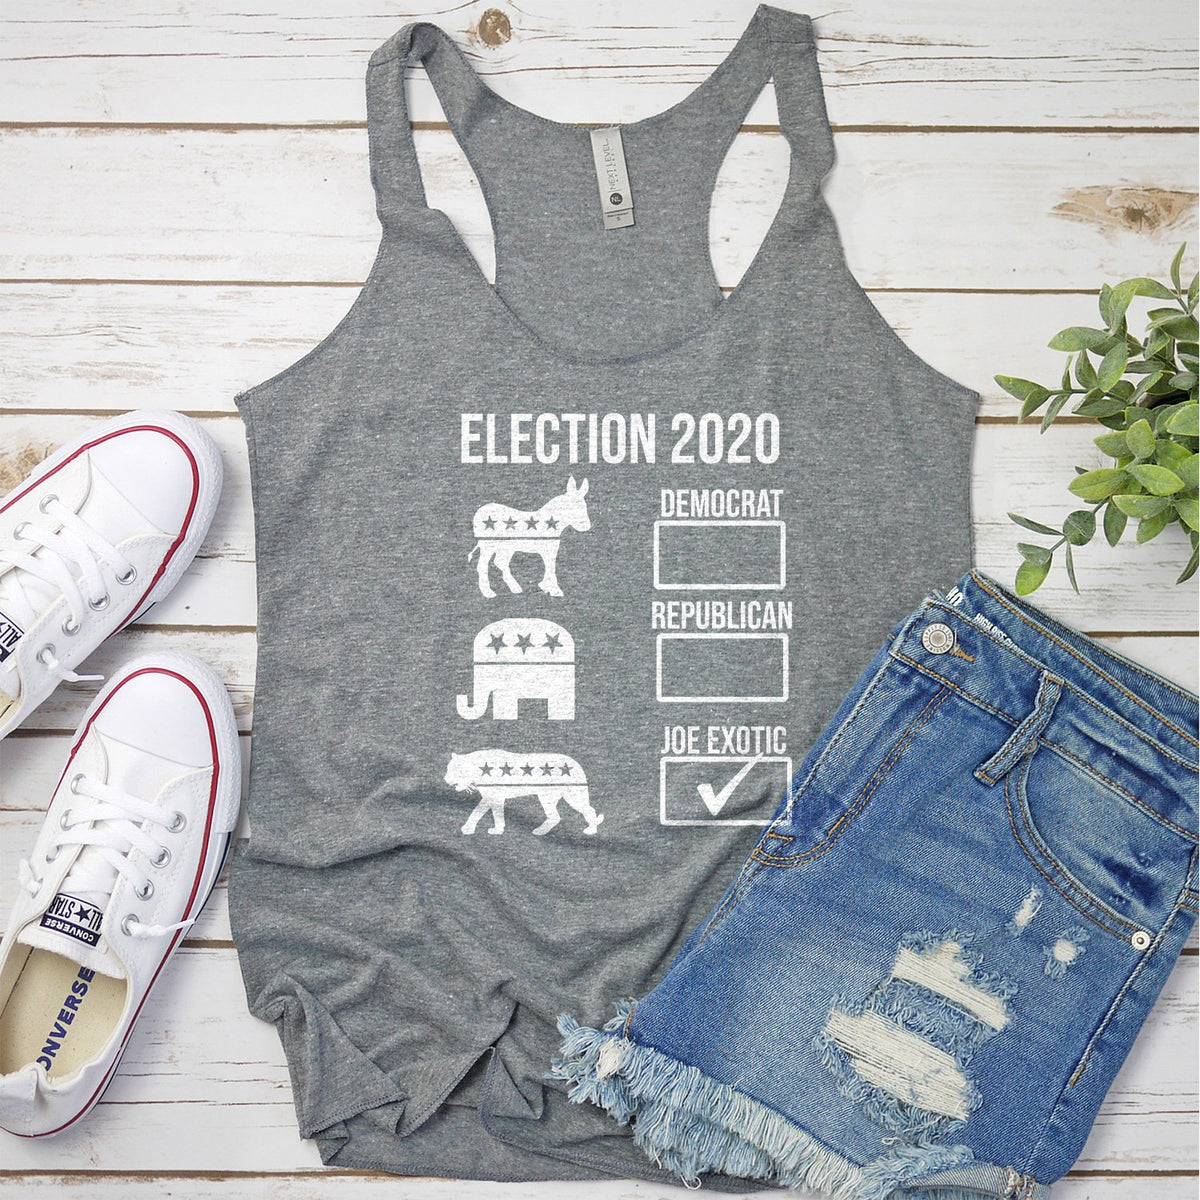 Joe Exotic Election 2020 - Tank Top Racerback